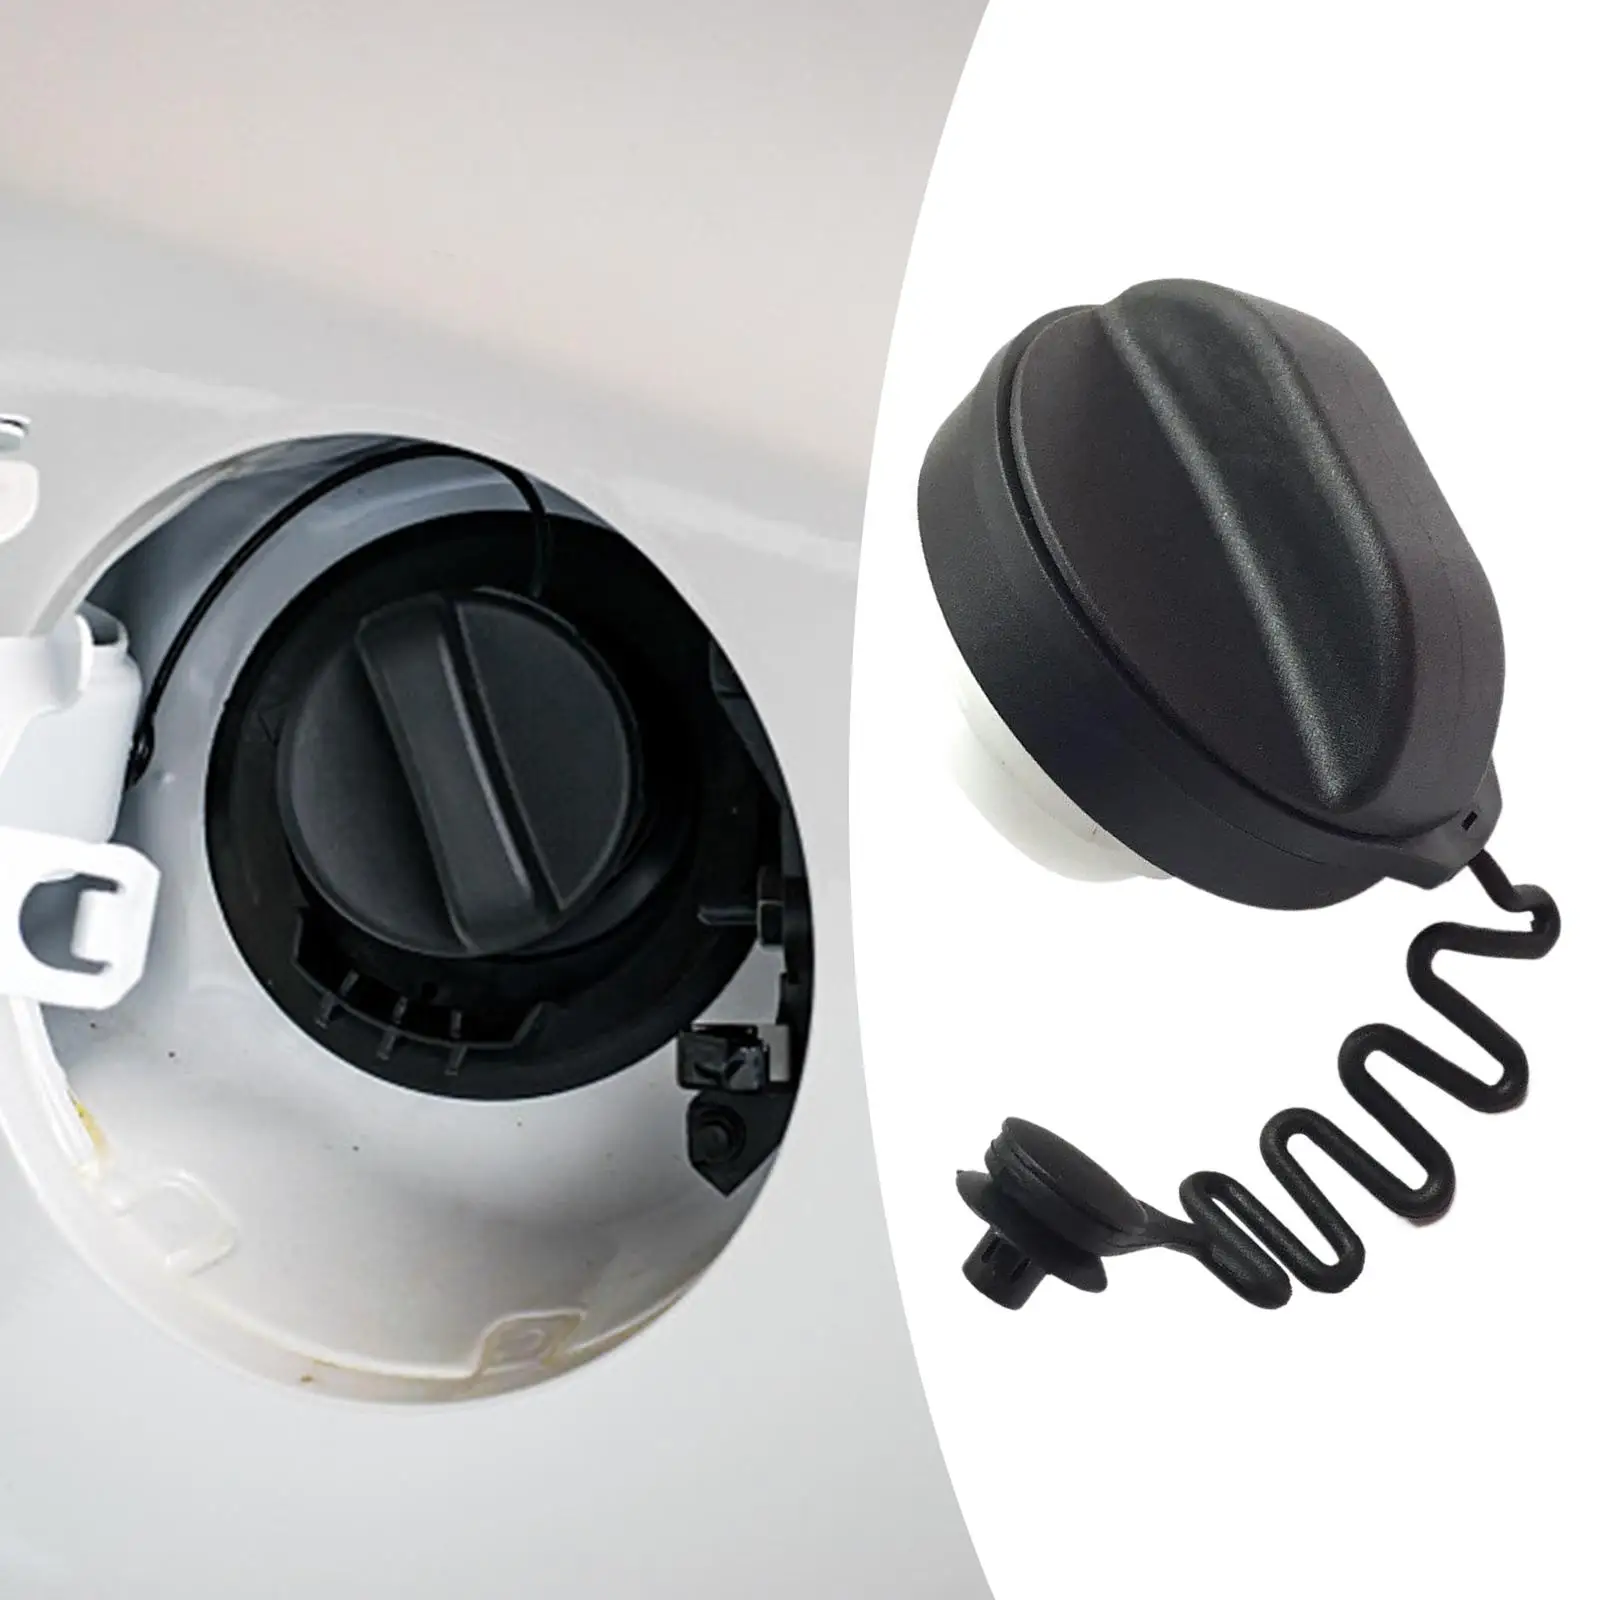 Fuel Filler Cap Assembly Car Accessories for Nissan Models Professional